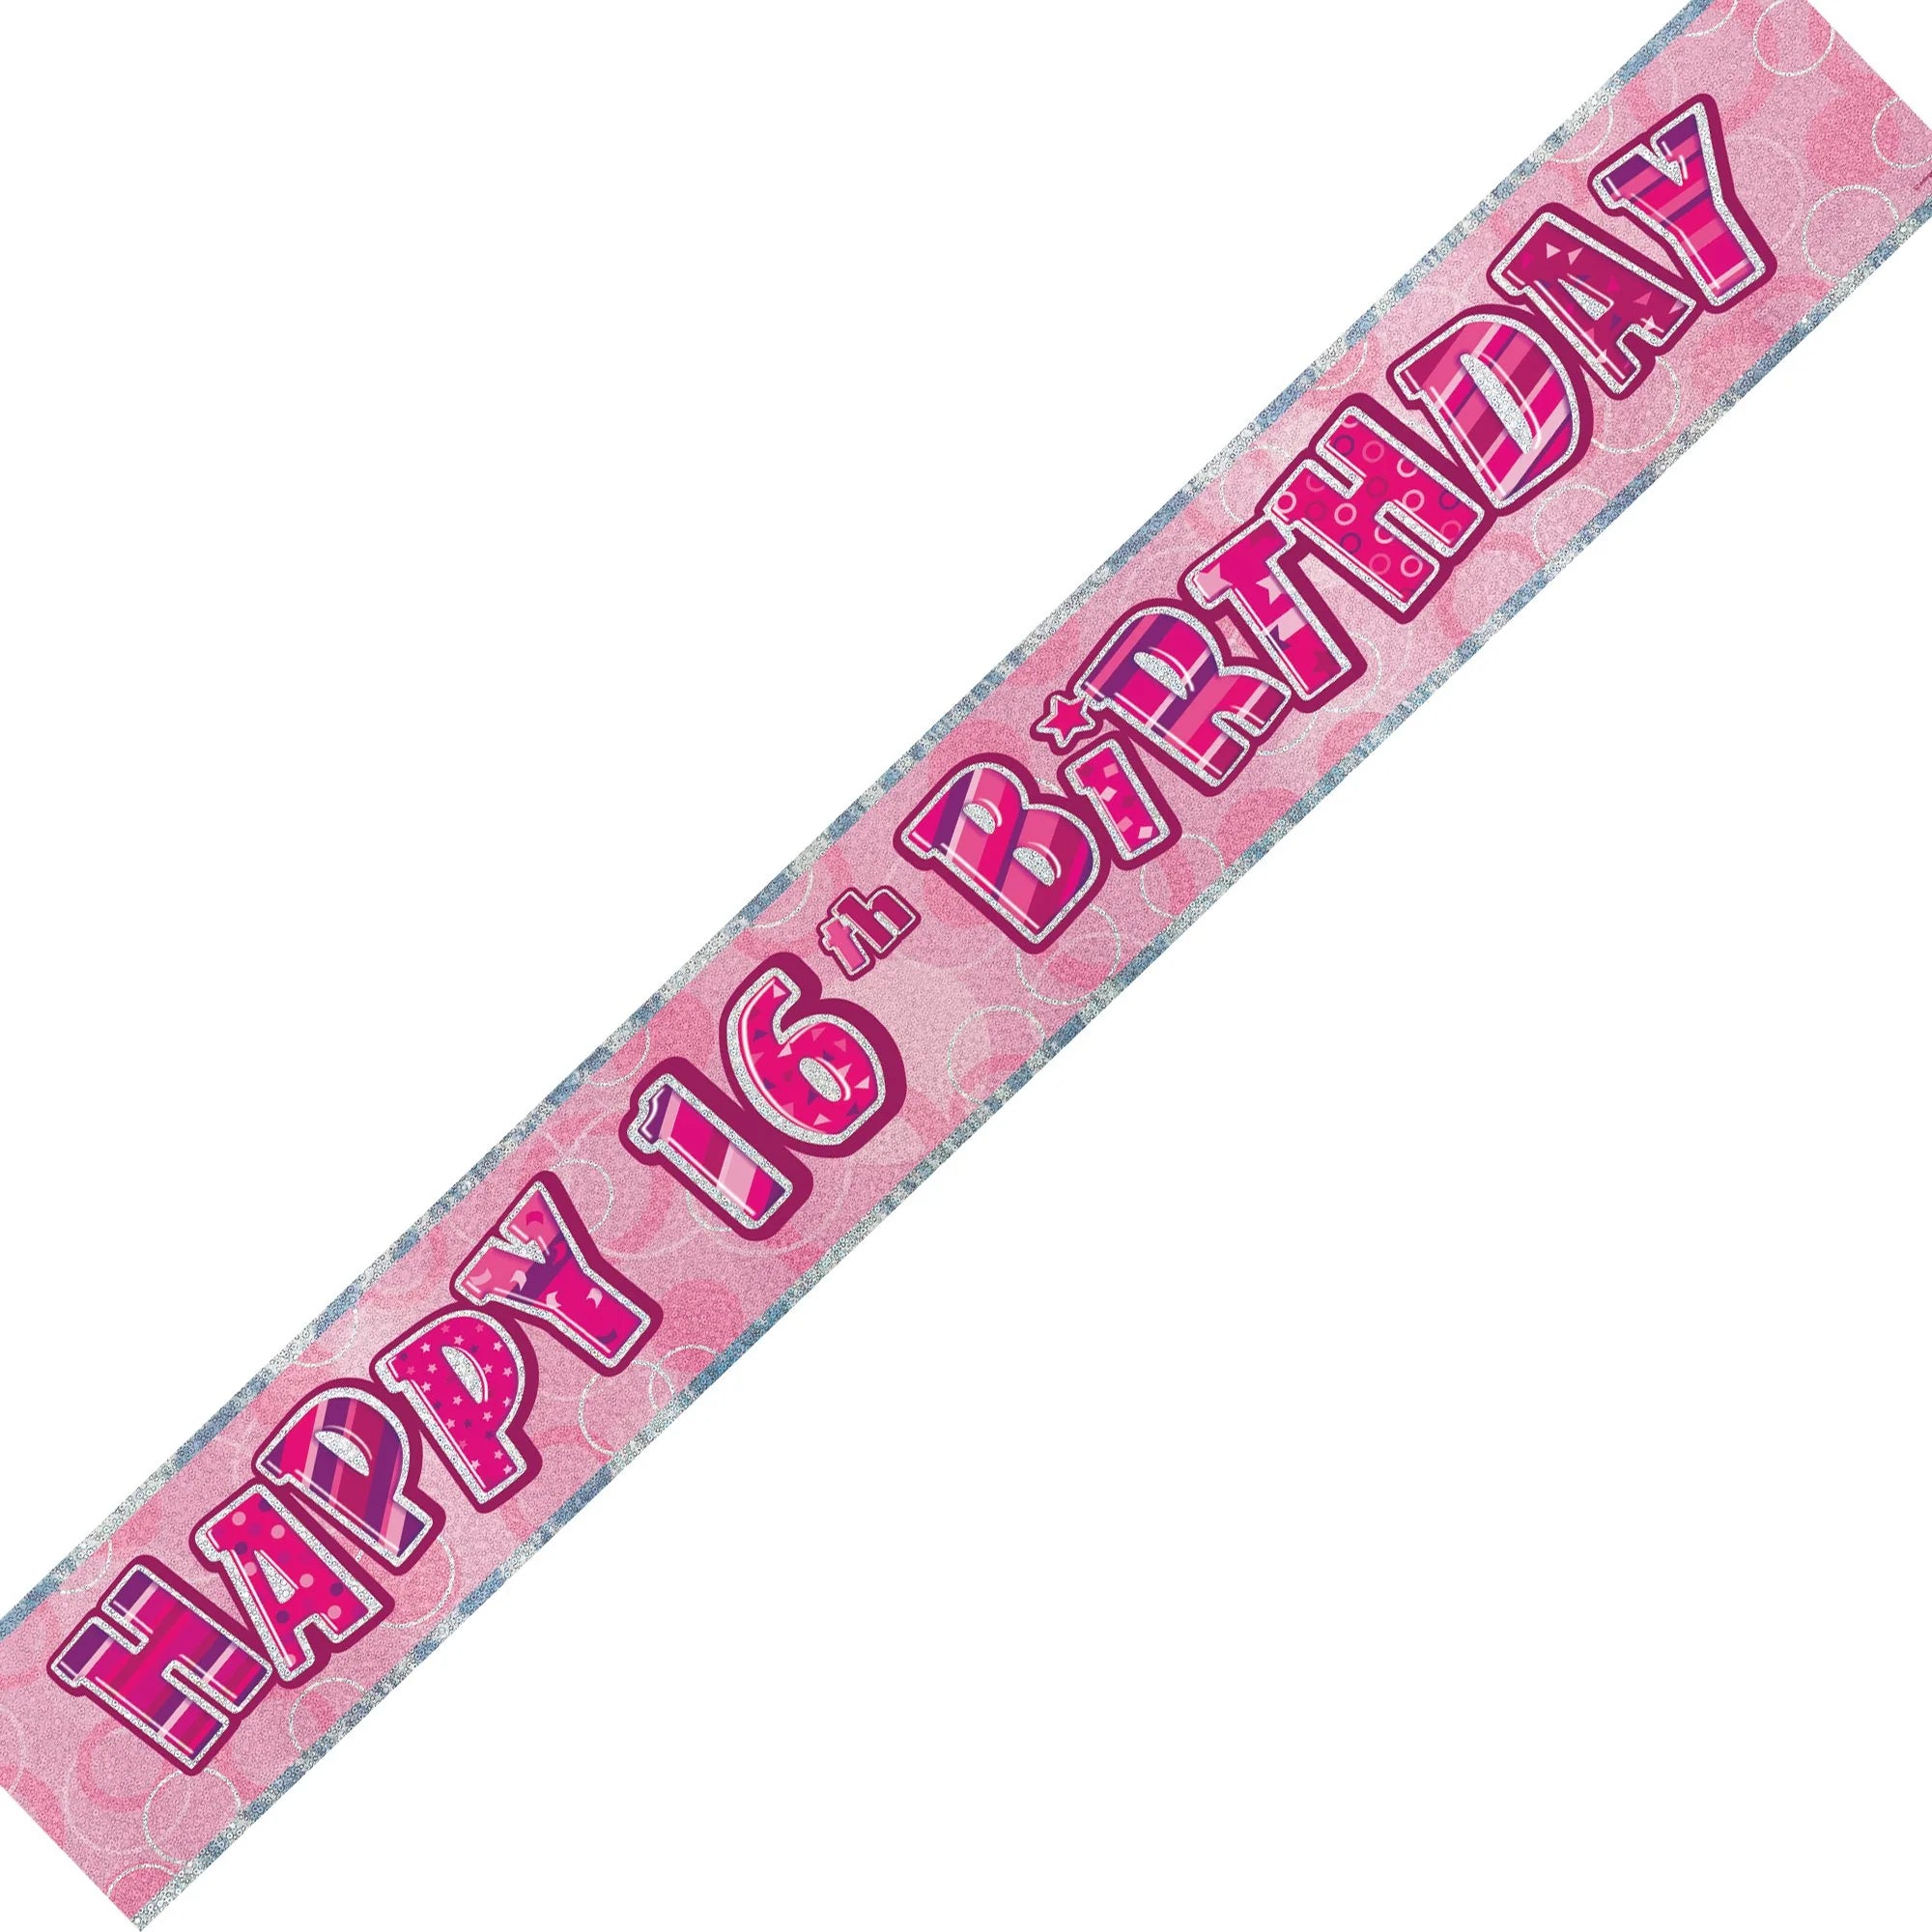 Pink & Silver Age 16 16th Birthday Celebration Happy Birthday Banner